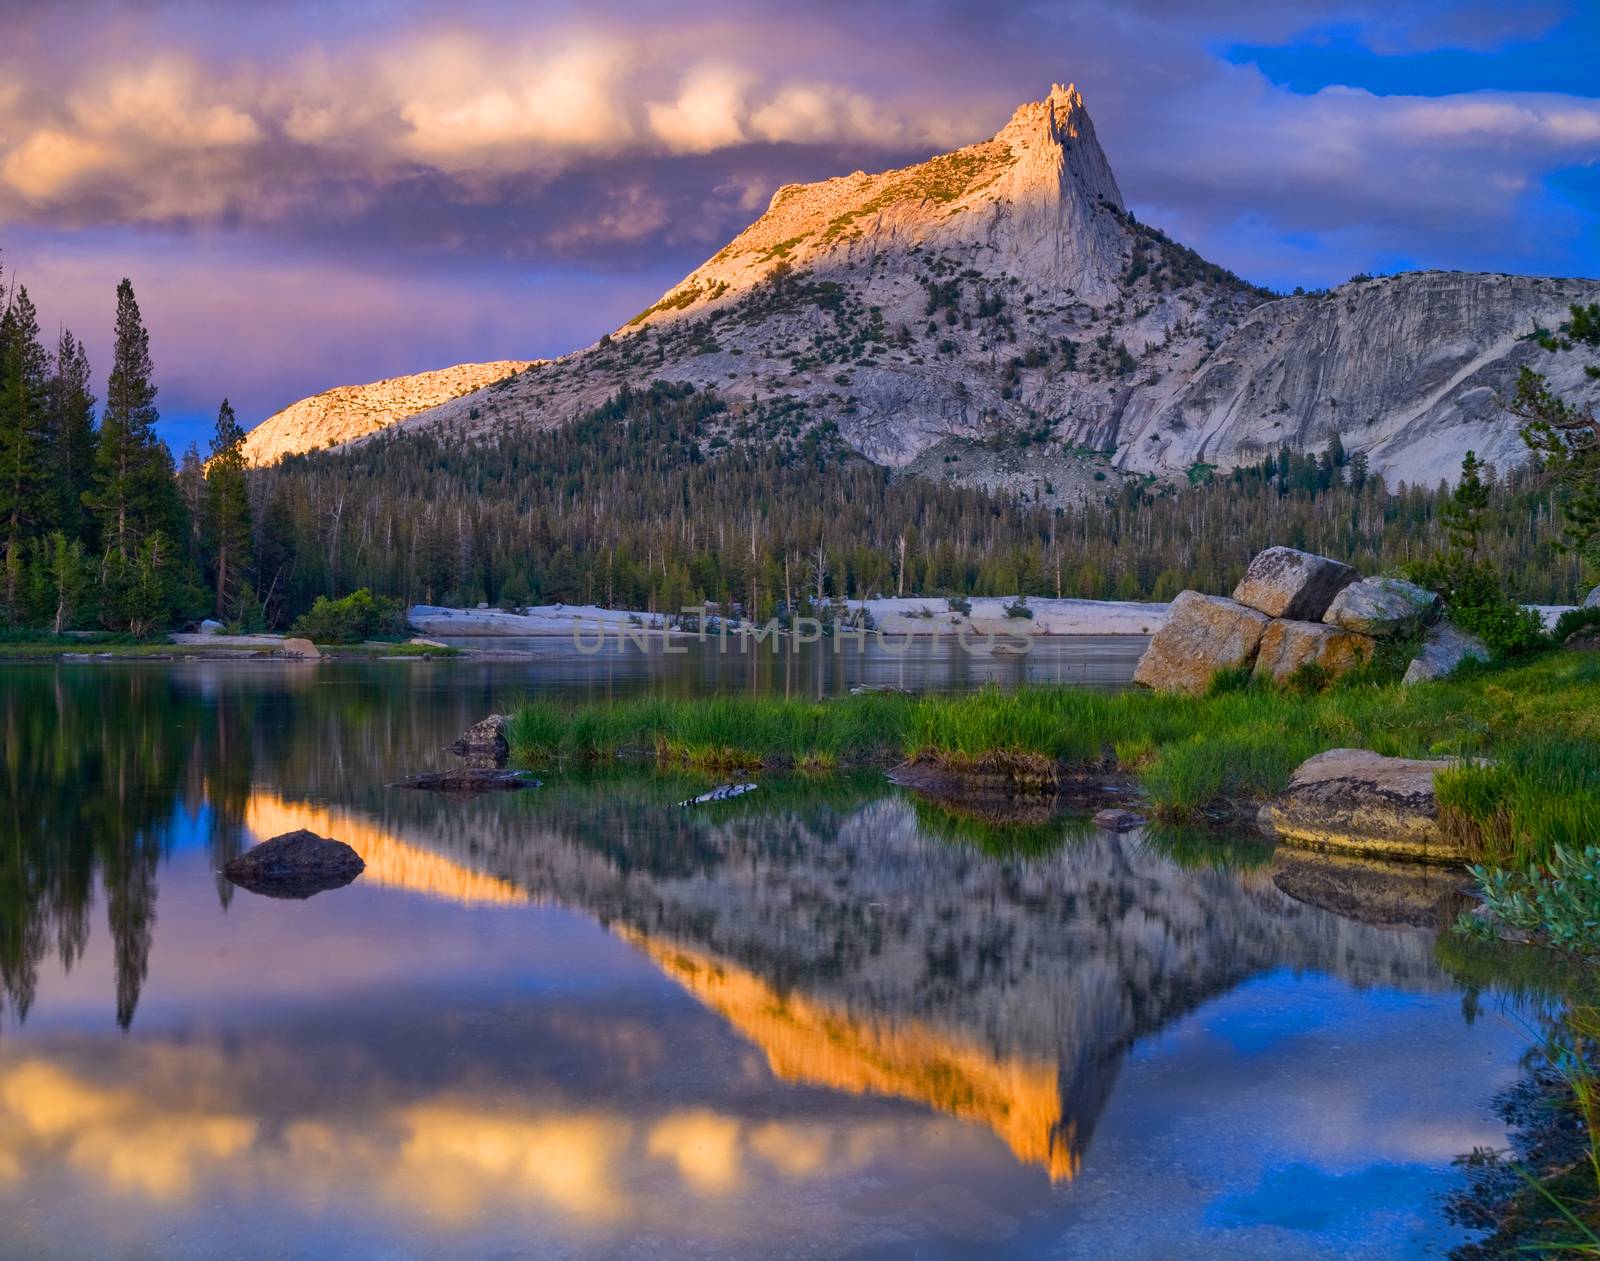 Cathedral Peak is a popular peak in the Toulumne meadows area in Yosemite National Park.